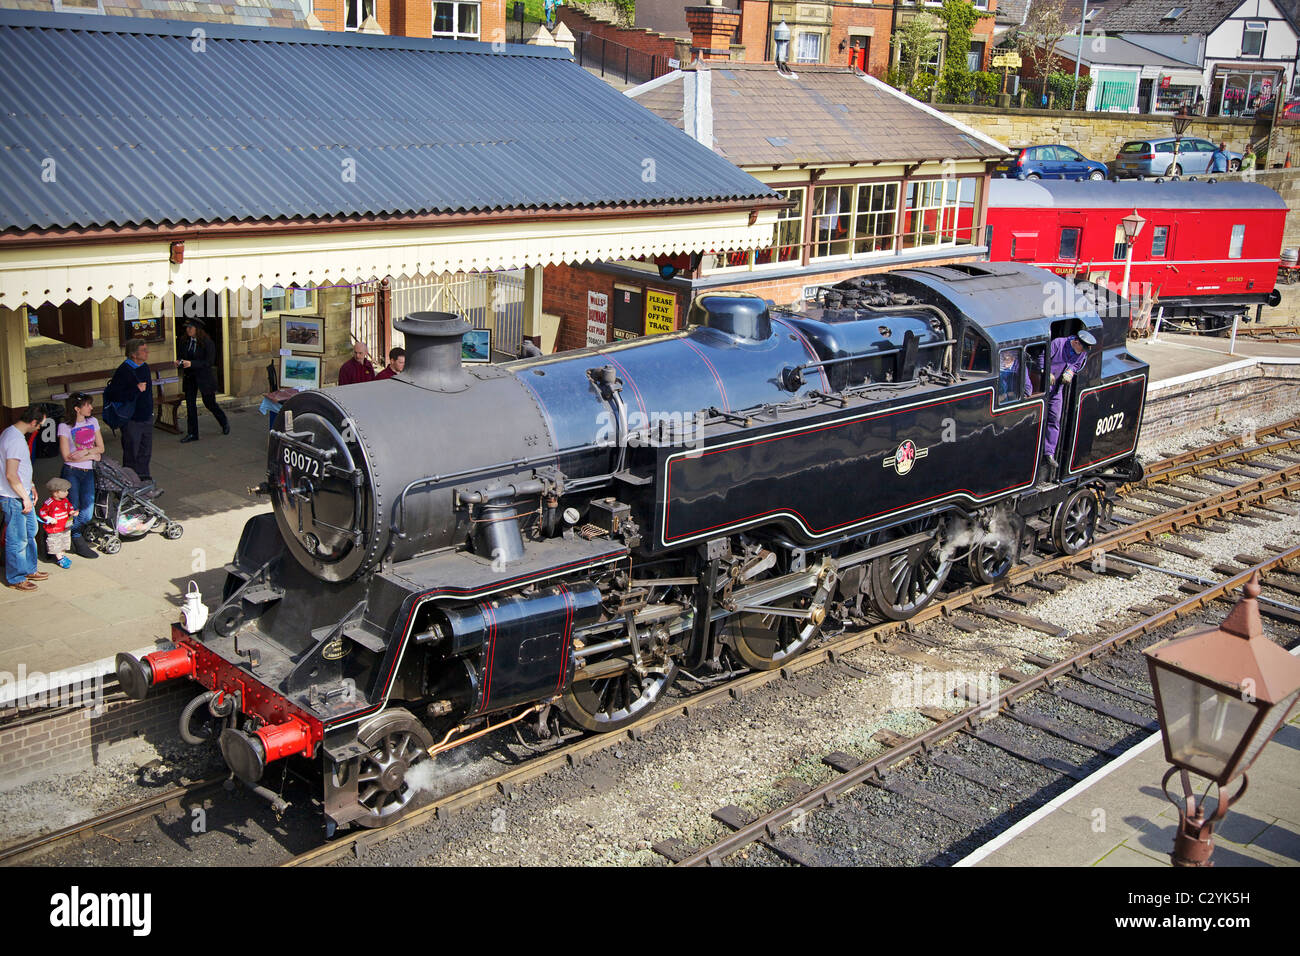 Locomotiva a vapore Company Limited ex British Railways enigmi 'Standard ' 4MT 2-6-4T numero di locomotiva 80072 a Llangollen. Foto Stock